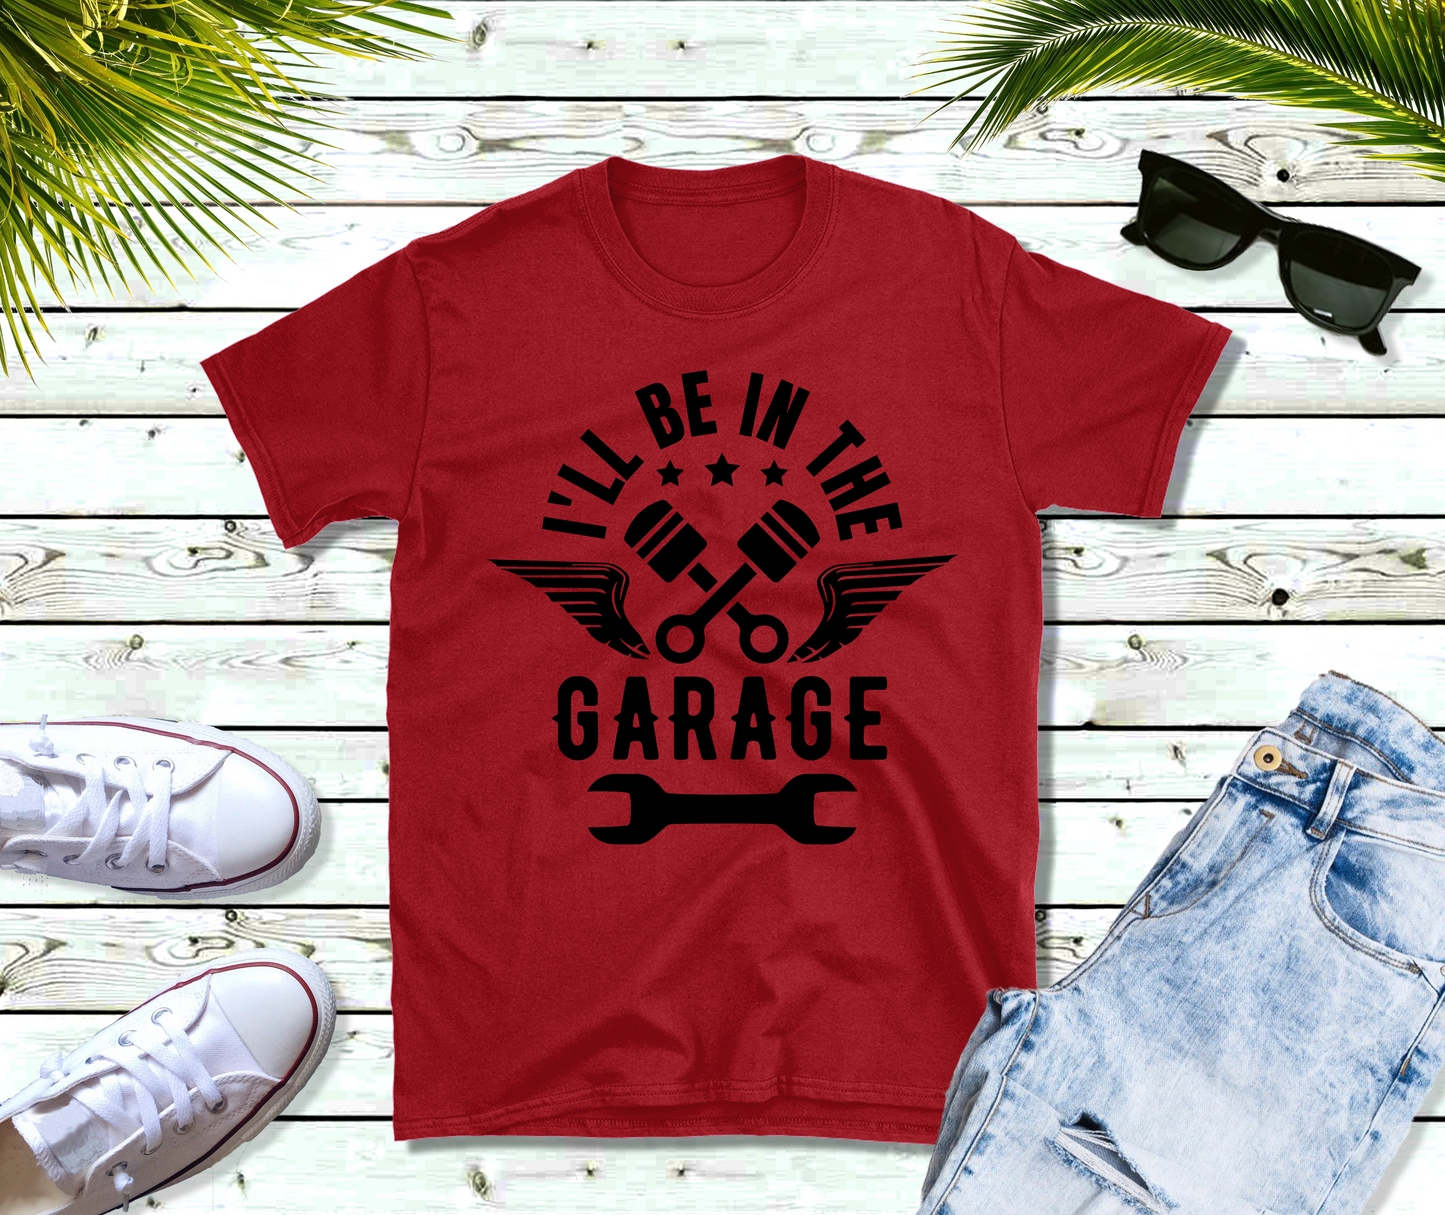 Black I'll be In The Garage Shirt, Funny Shirt Men, Fathers Day Gift, Dad shirt, Mechanic funny Tee, Husband Gift, Garage TShirt